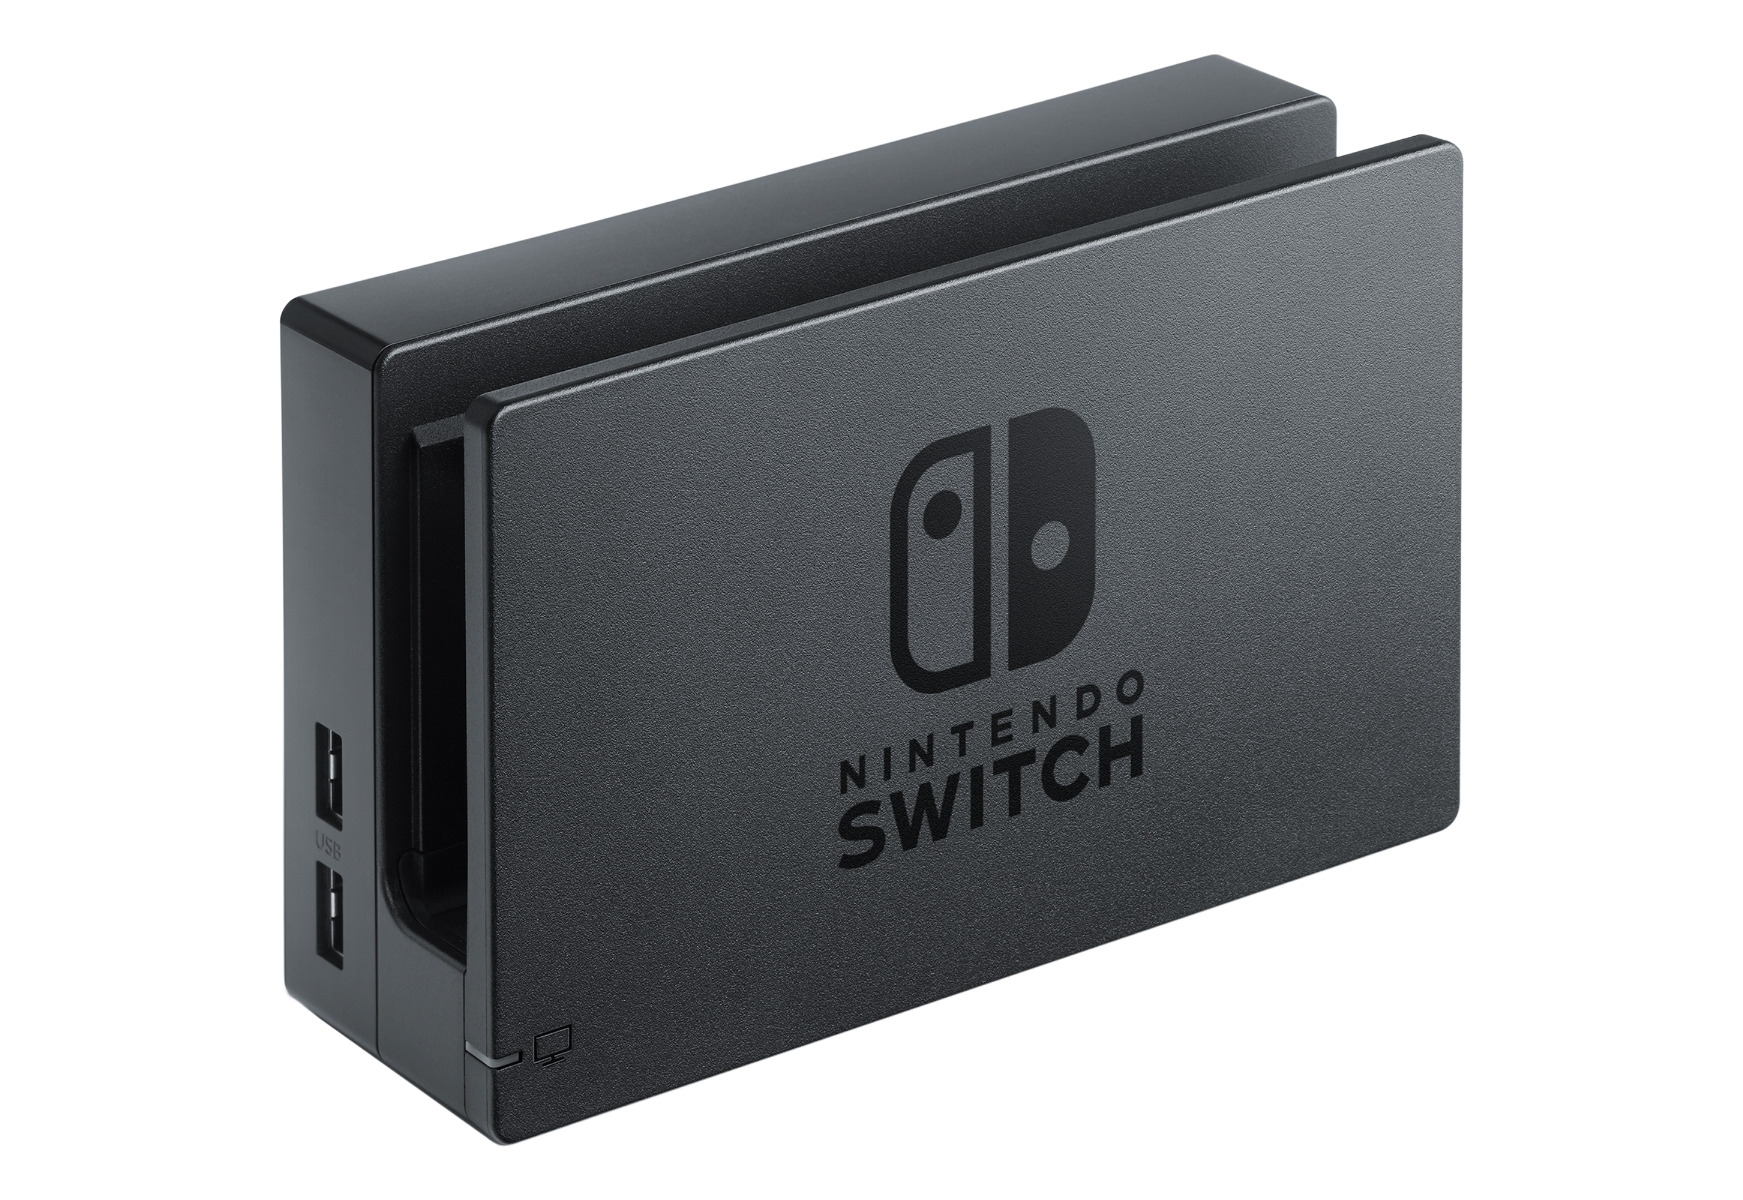 Nintendo Switch Dock (Refurbished) $39.99 @ Nintendo.com w/ $6.99 Shipping